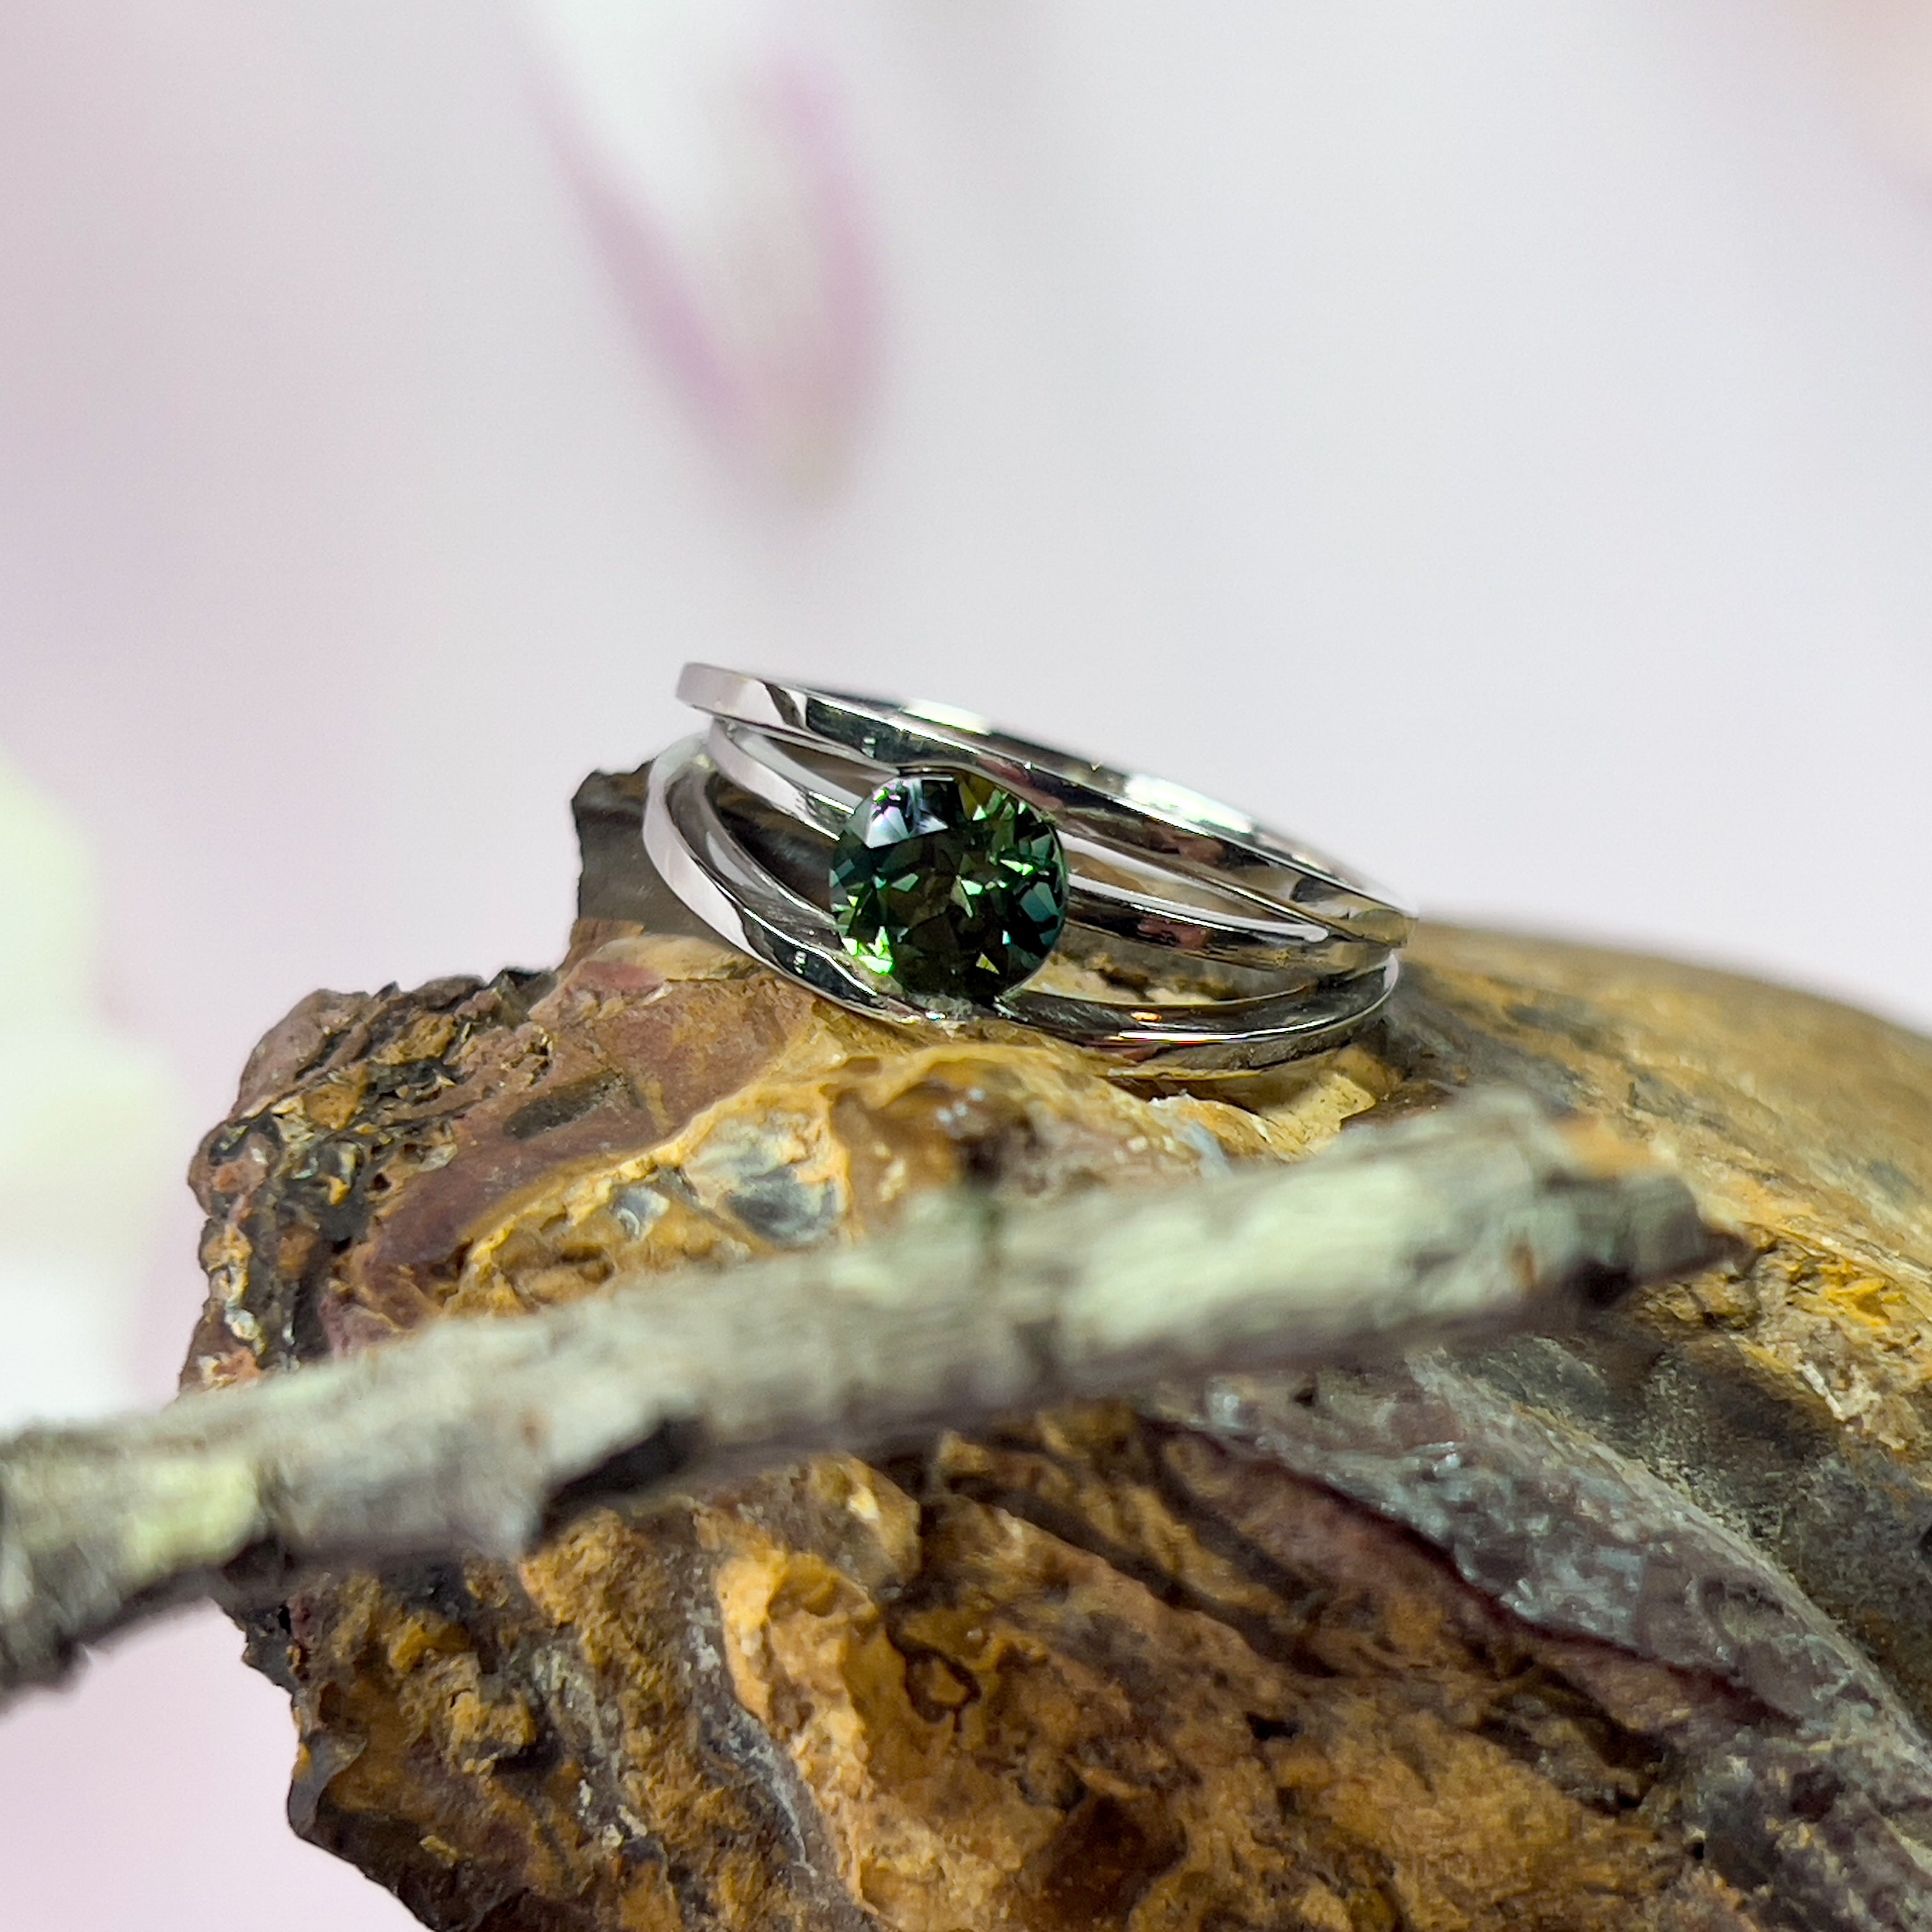 Platinum Parti Sapphire 1.18ct solitaire ring - Masterpiece Jewellery Opal & Gems Sydney Australia | Online Shop